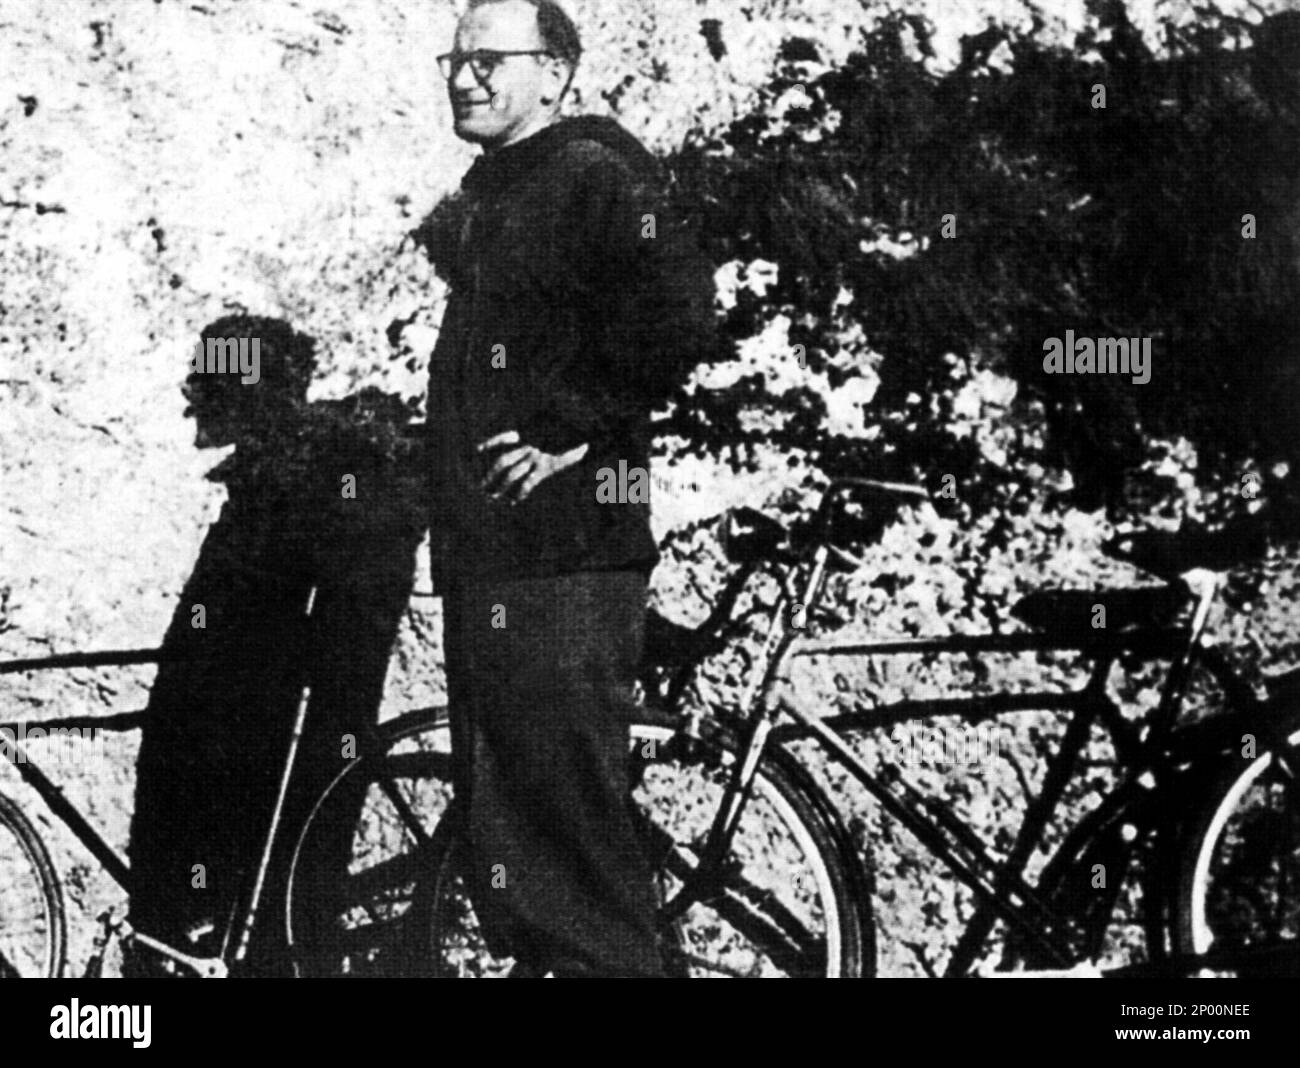 1950er Jahre , Kracovia , Polen : der junge Priester KAROL Josef WOJTYLA ( 1920 - 2005) Mit dem Fahrrad - PAPA GIOVANNI PAOLO II - PAPST JOHANNES PAUL II - Vatikan - Vatikanstadt - Papi - religionskattolica - katholische Religion - Persönlichkeit als Kind - Jungen - Personalità da giovani - giovane - Berühmtheit - Berühmtheiten - celebrità - POLONIA - bicicletta - Ciclista - Ciclismo --- Archivio GBB Stockfoto